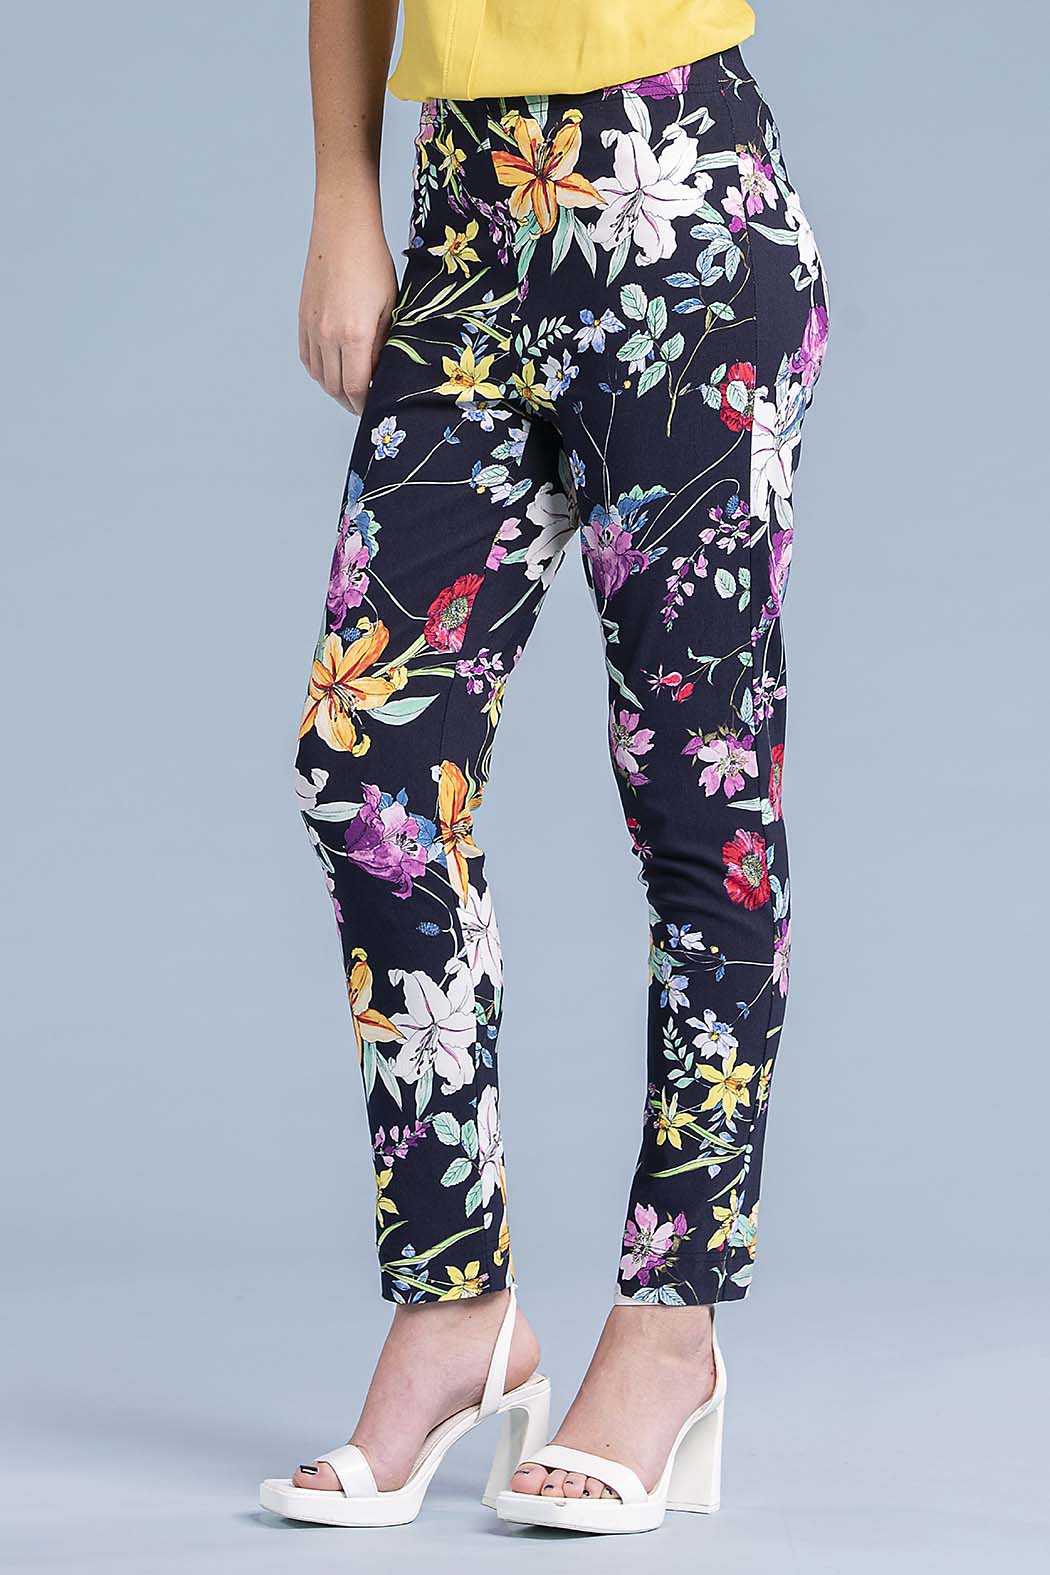 Pantalon Con Estampado De Flores